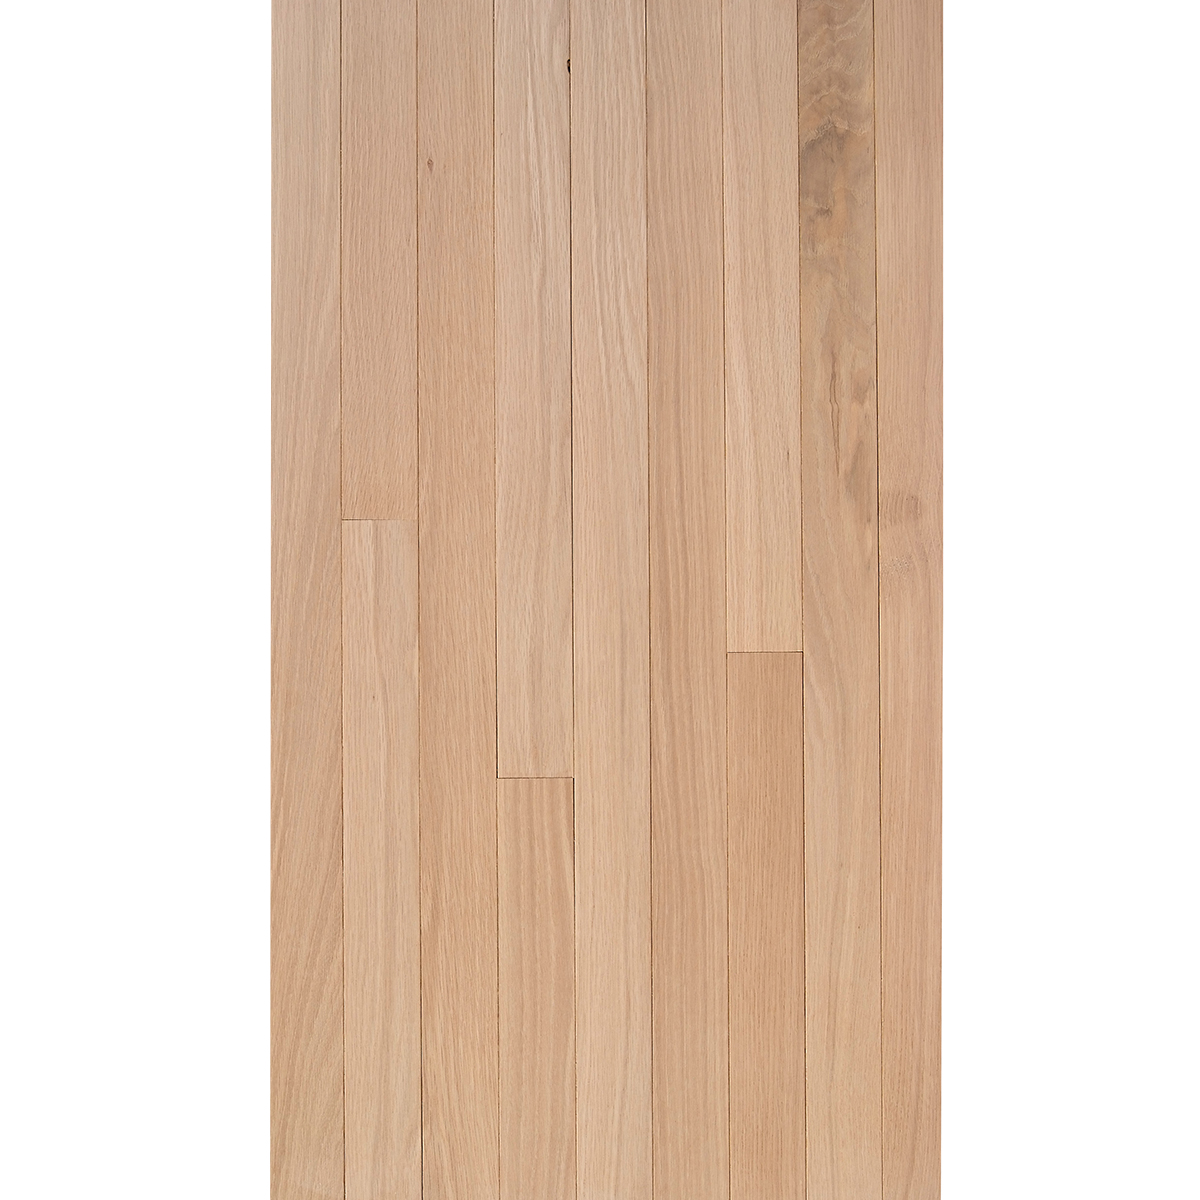 White Oak 3 4 X 2 1 Select Grade, 1 2 Inch Oak Hardwood Flooring